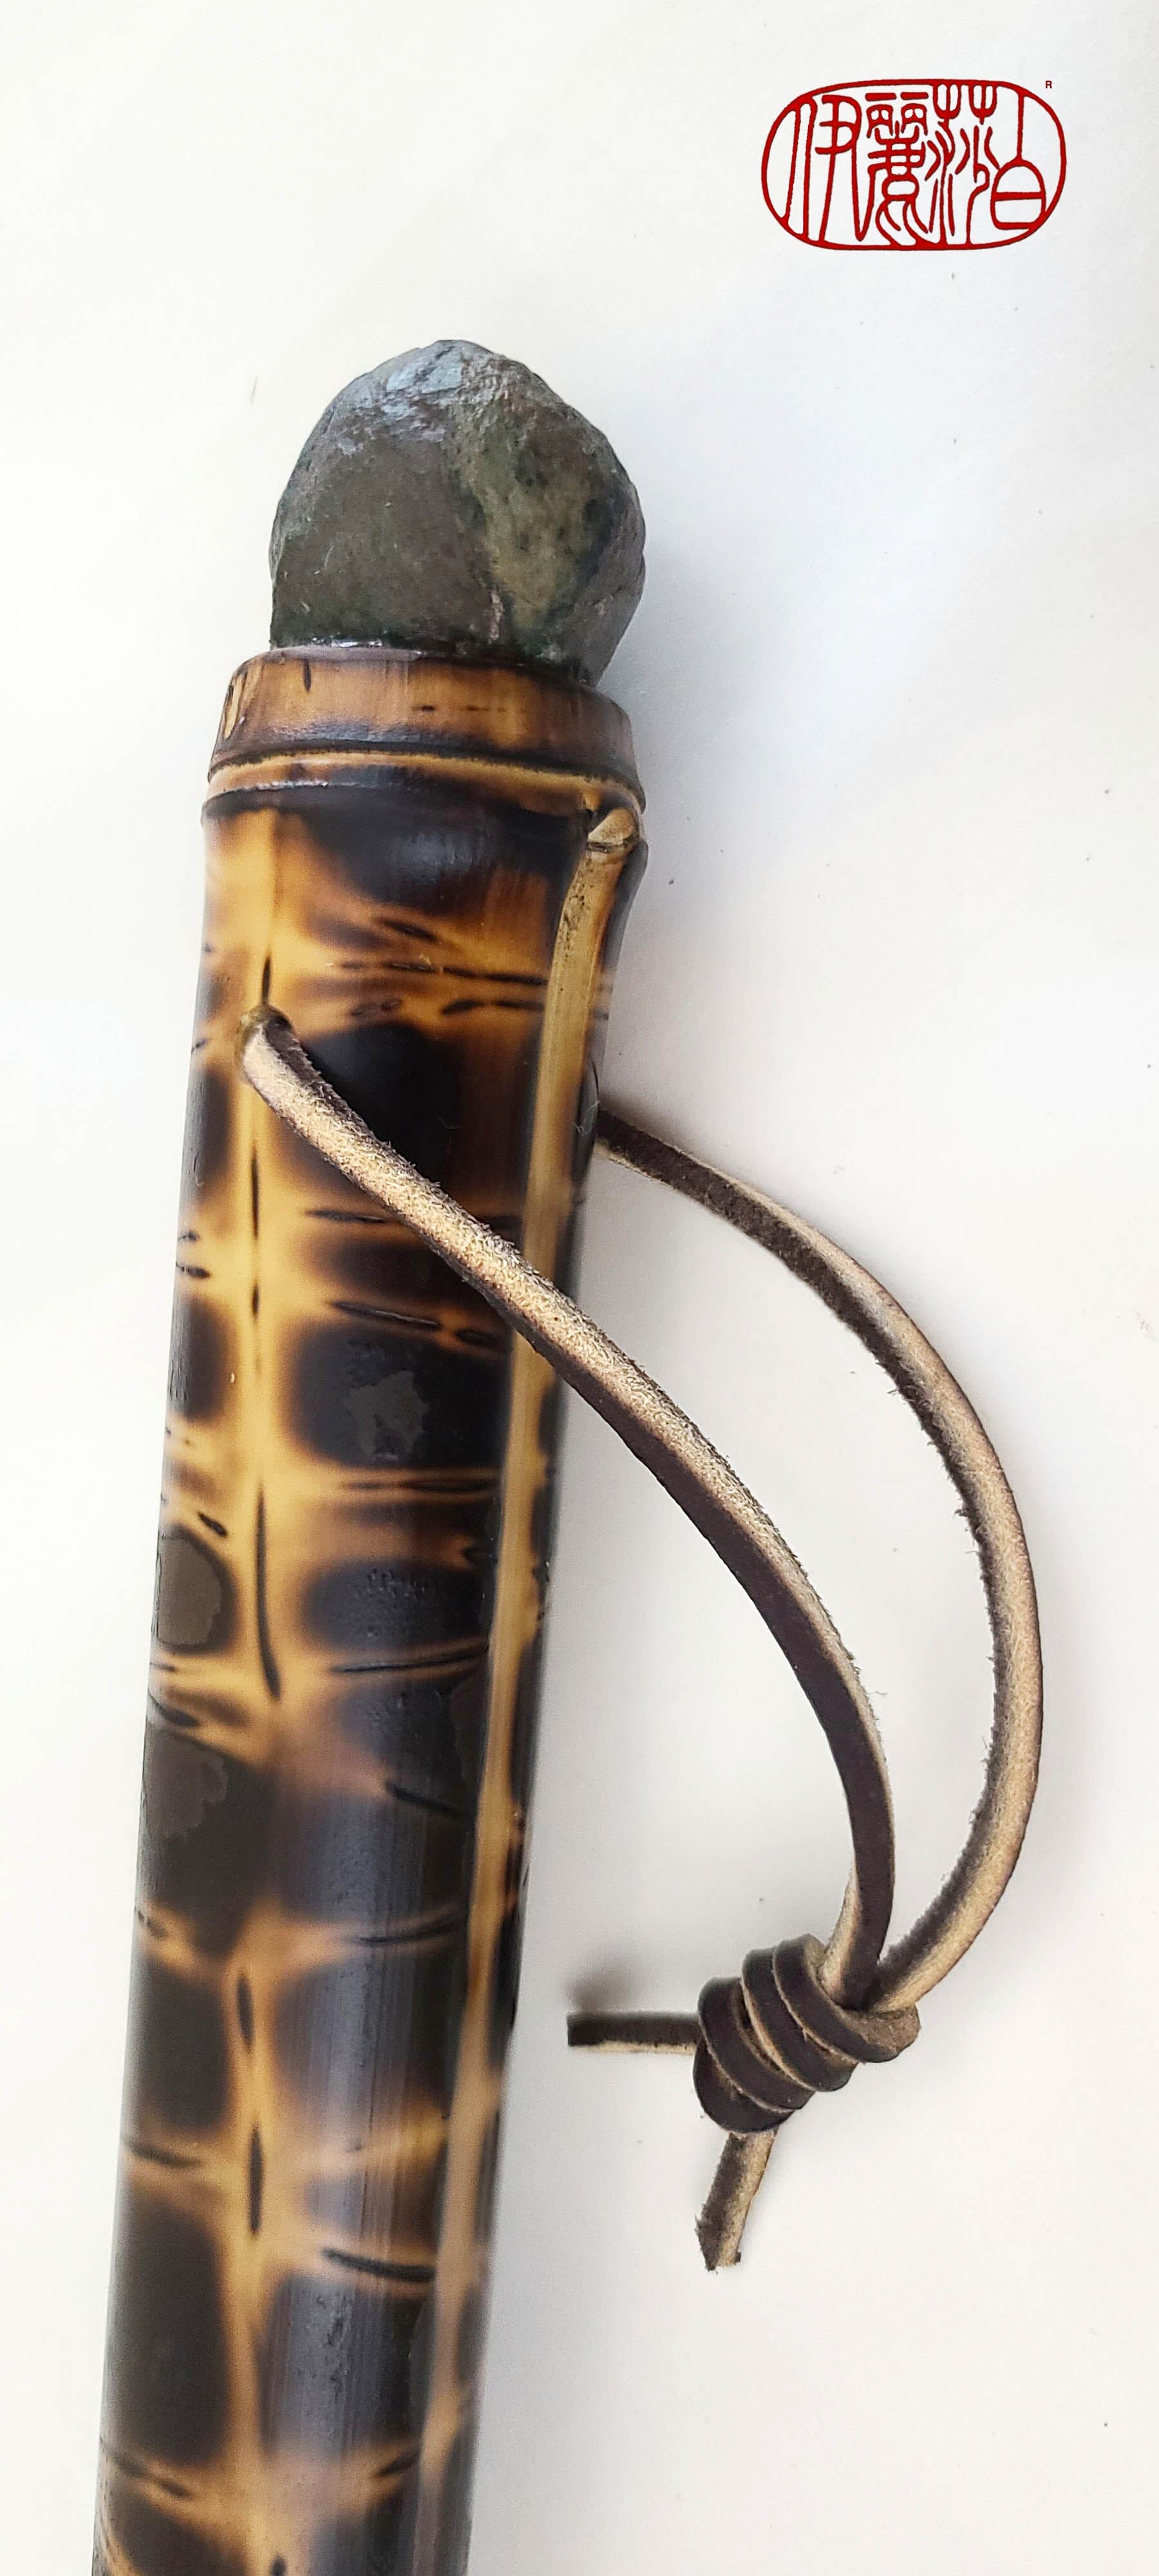 Large 10" Black Horsehair Sumi-e Paint Brush With Ceramic Ferrule PS52 Art Supplies Elizabeth Schowachert Art